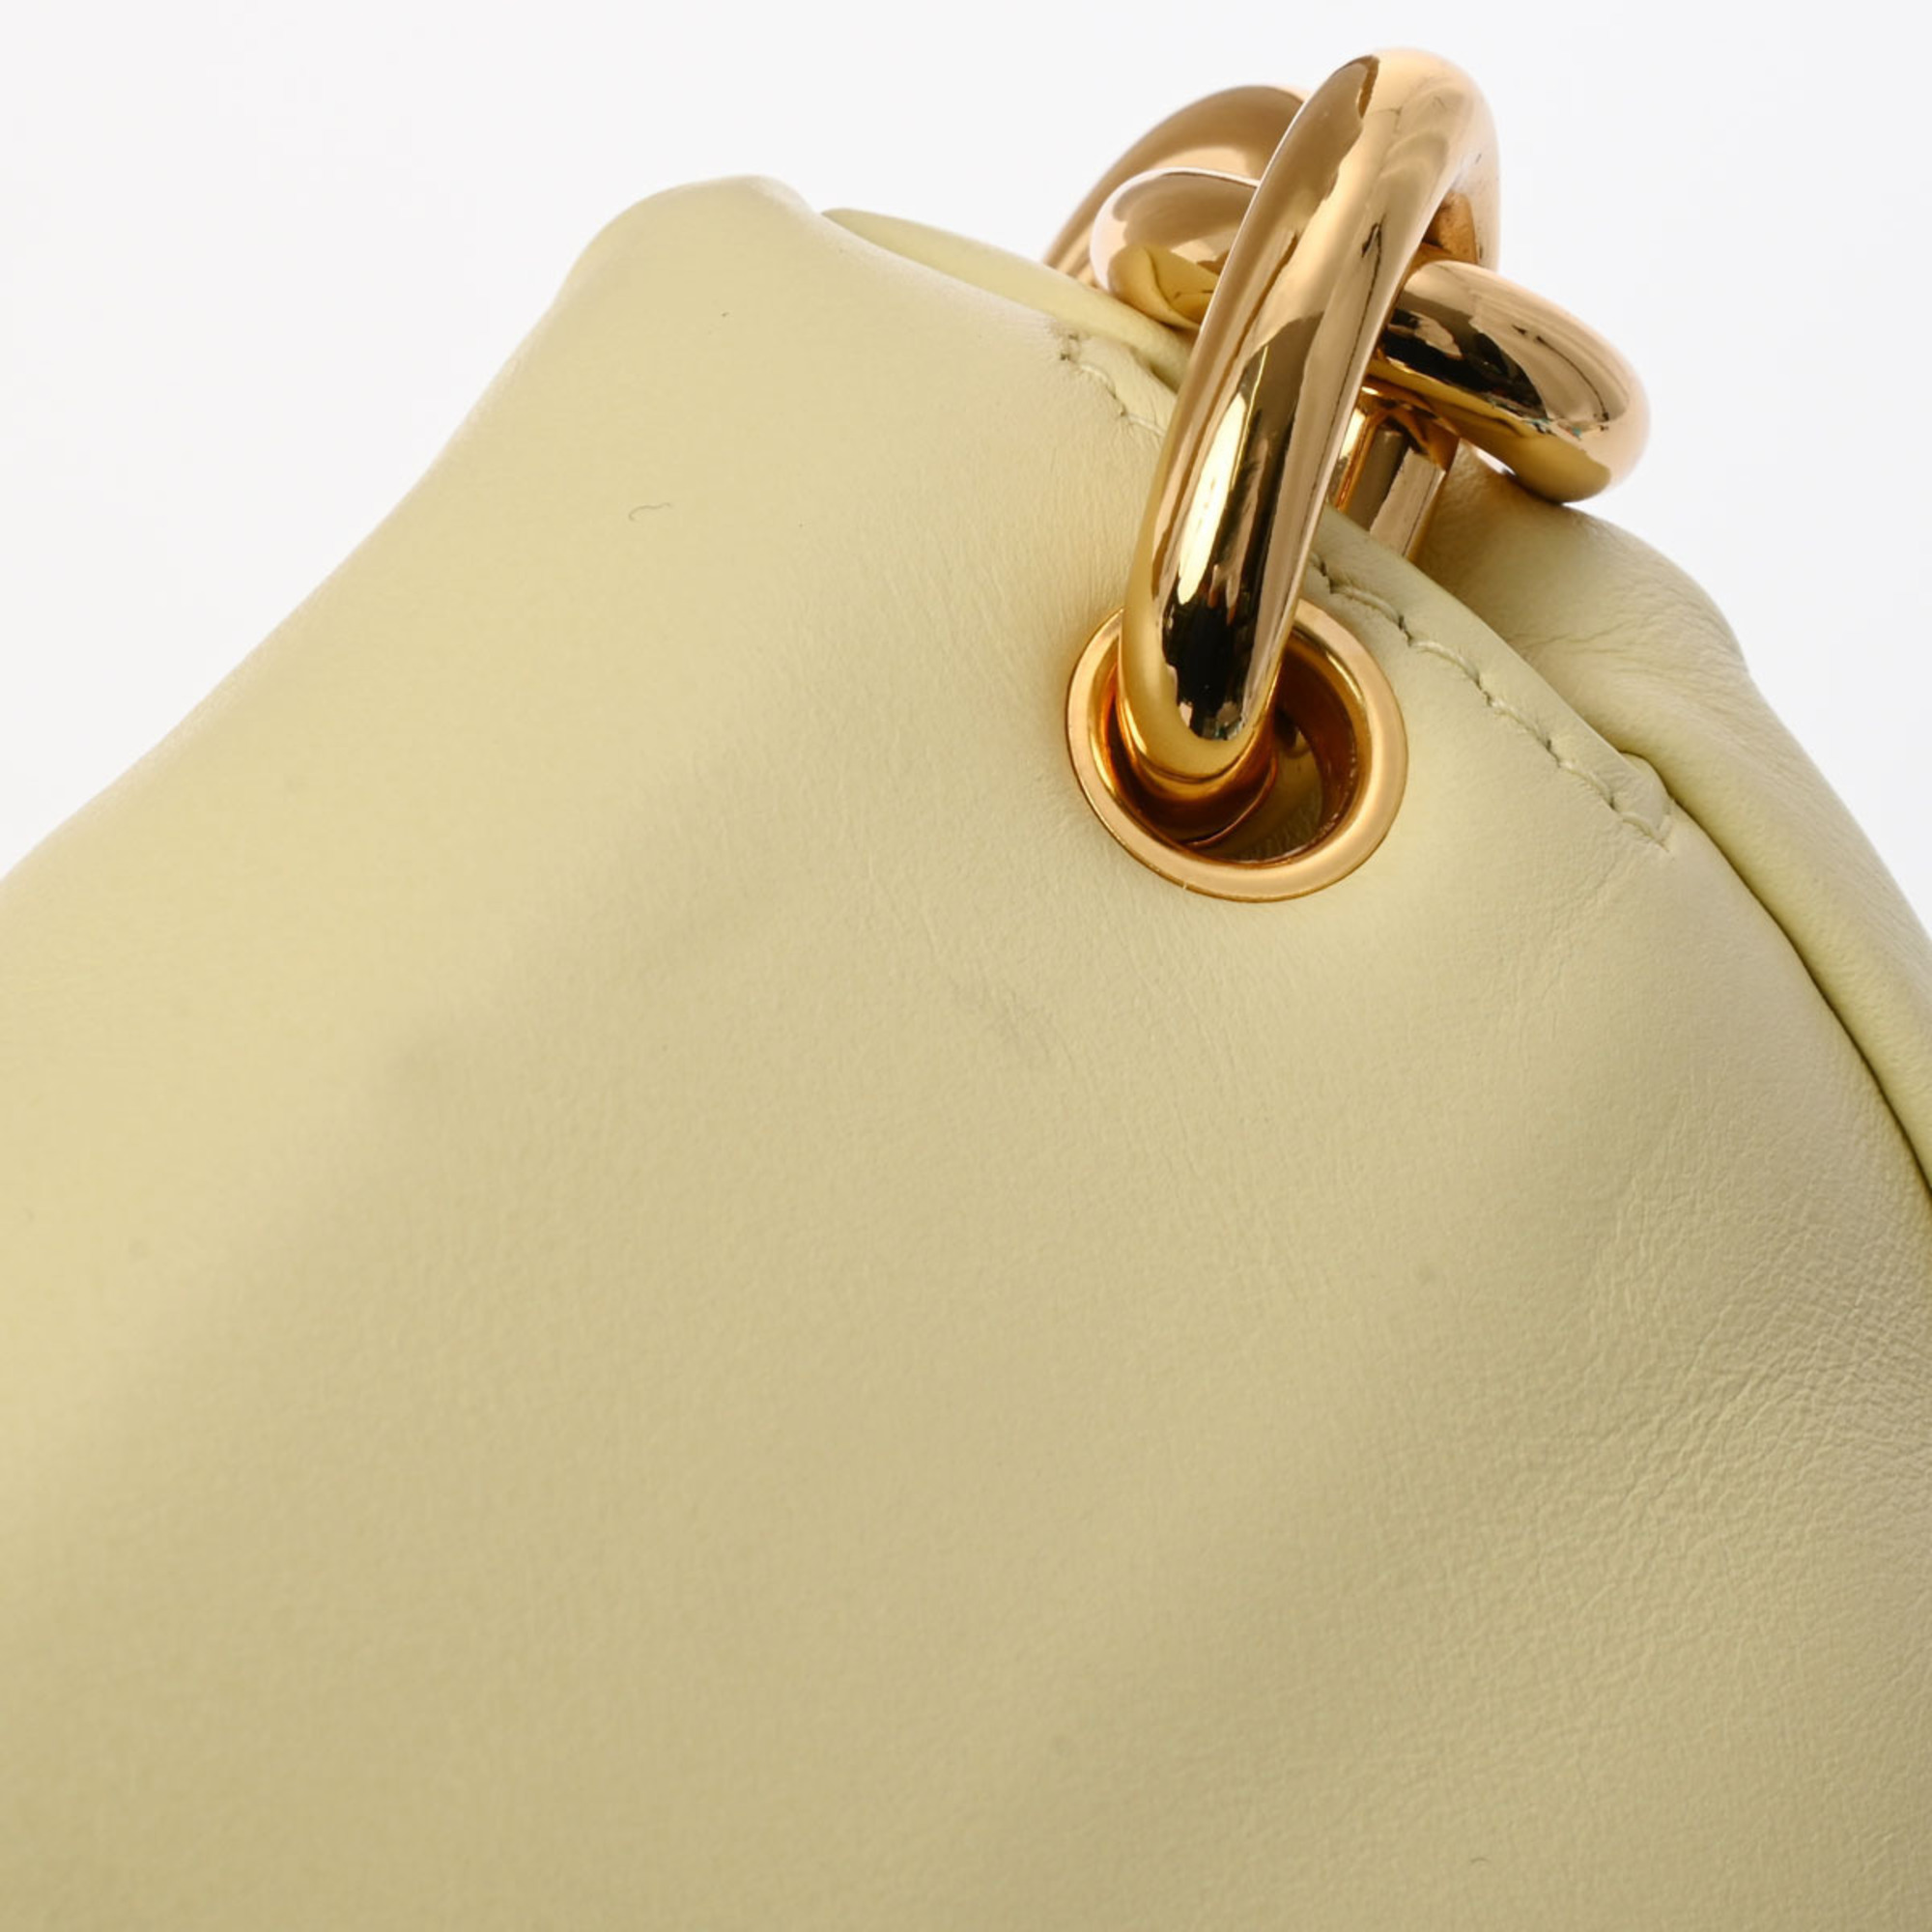 BOTTEGAVENETA Bottega Veneta The Chain Pouch Cream 651445 Women's Leather Shoulder Bag